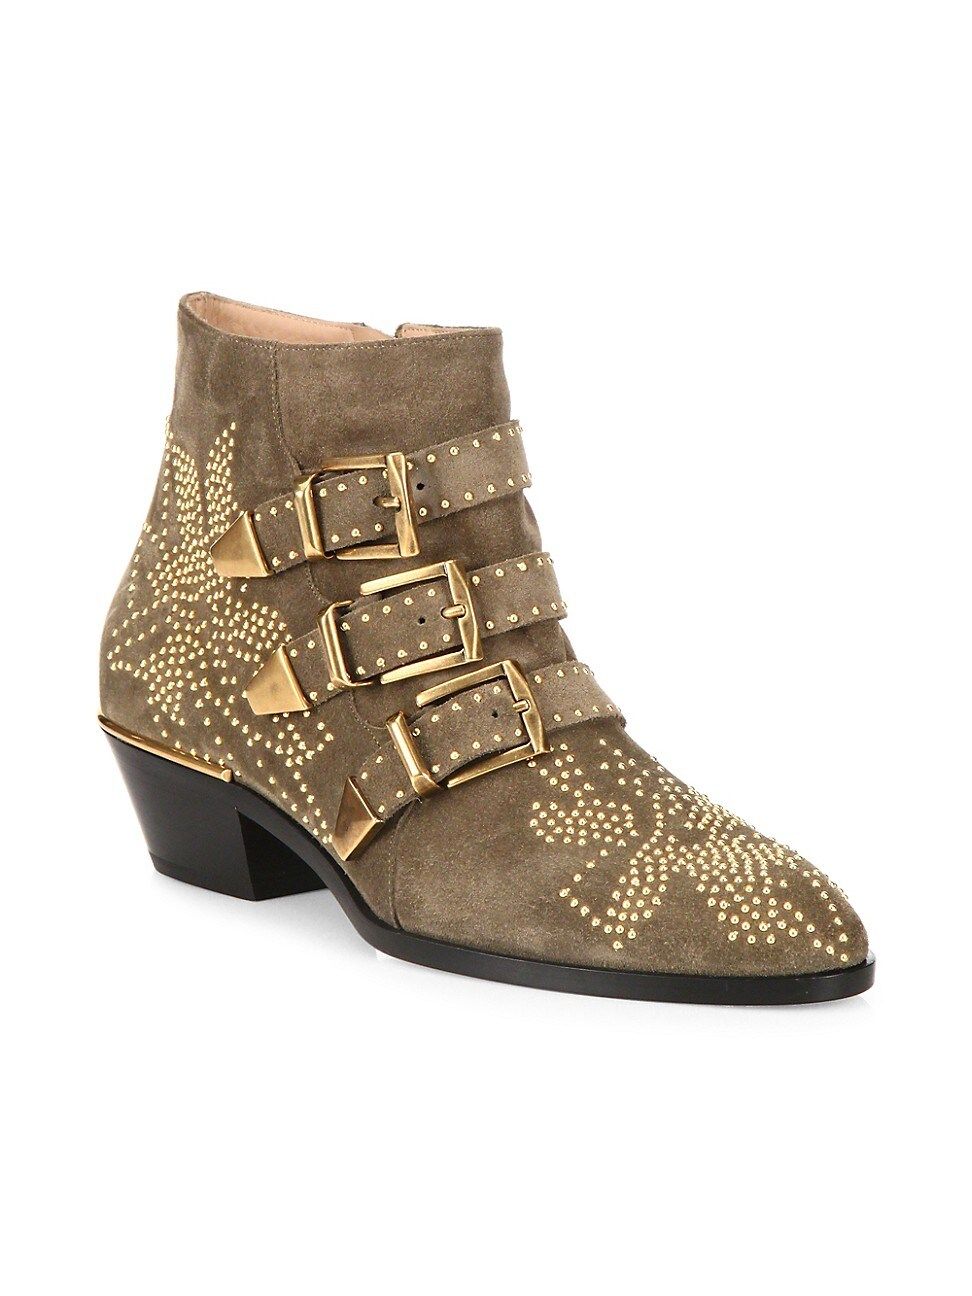 Chloé Women's Susanna Studded Suede Ankle Boots - Tan - Size 11 | Saks Fifth Avenue